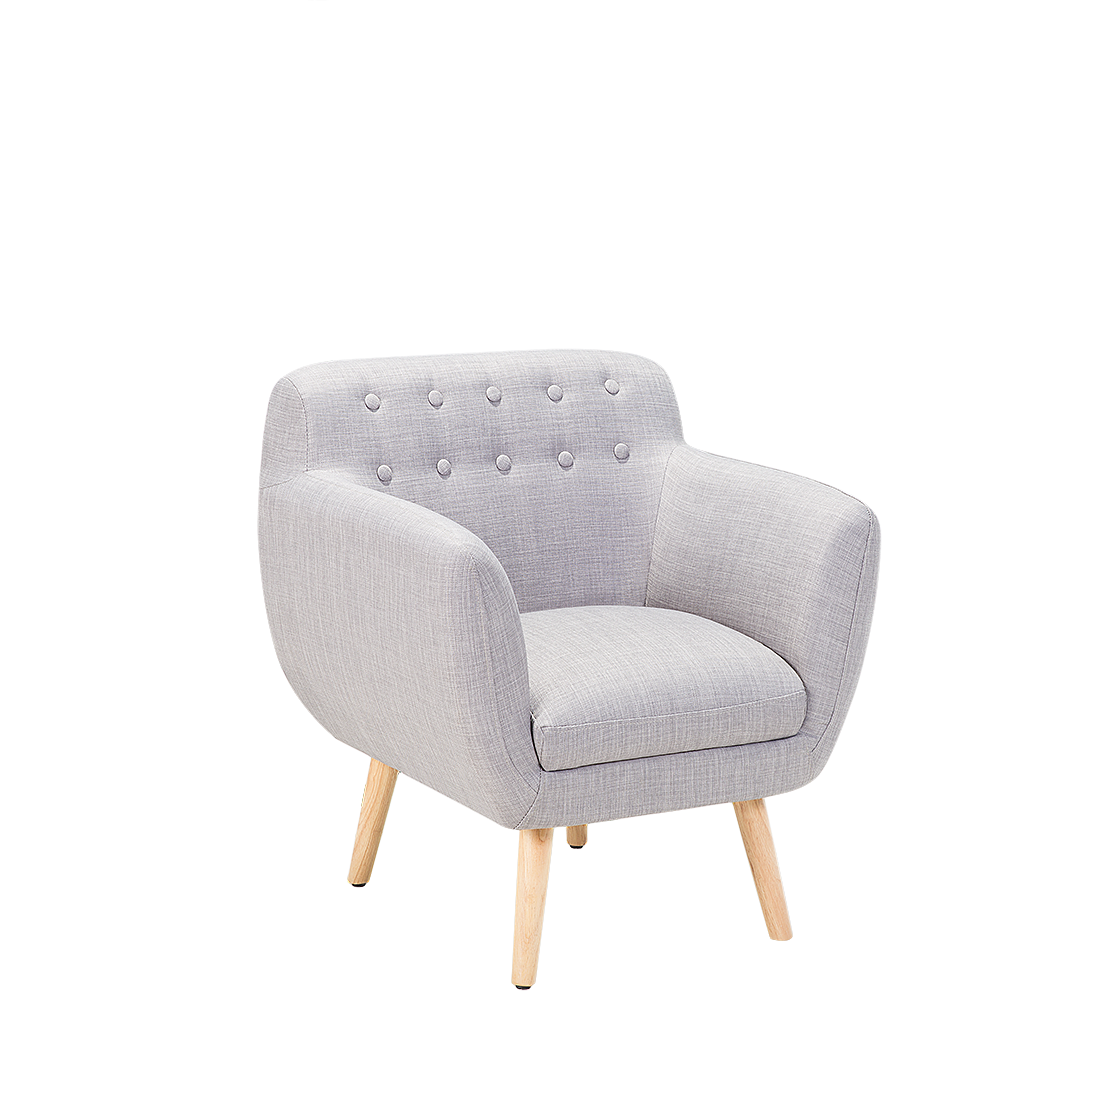 Beliani Armchair Grey Fabric Upholstery Buttoned Retro Club Chair Retro Style